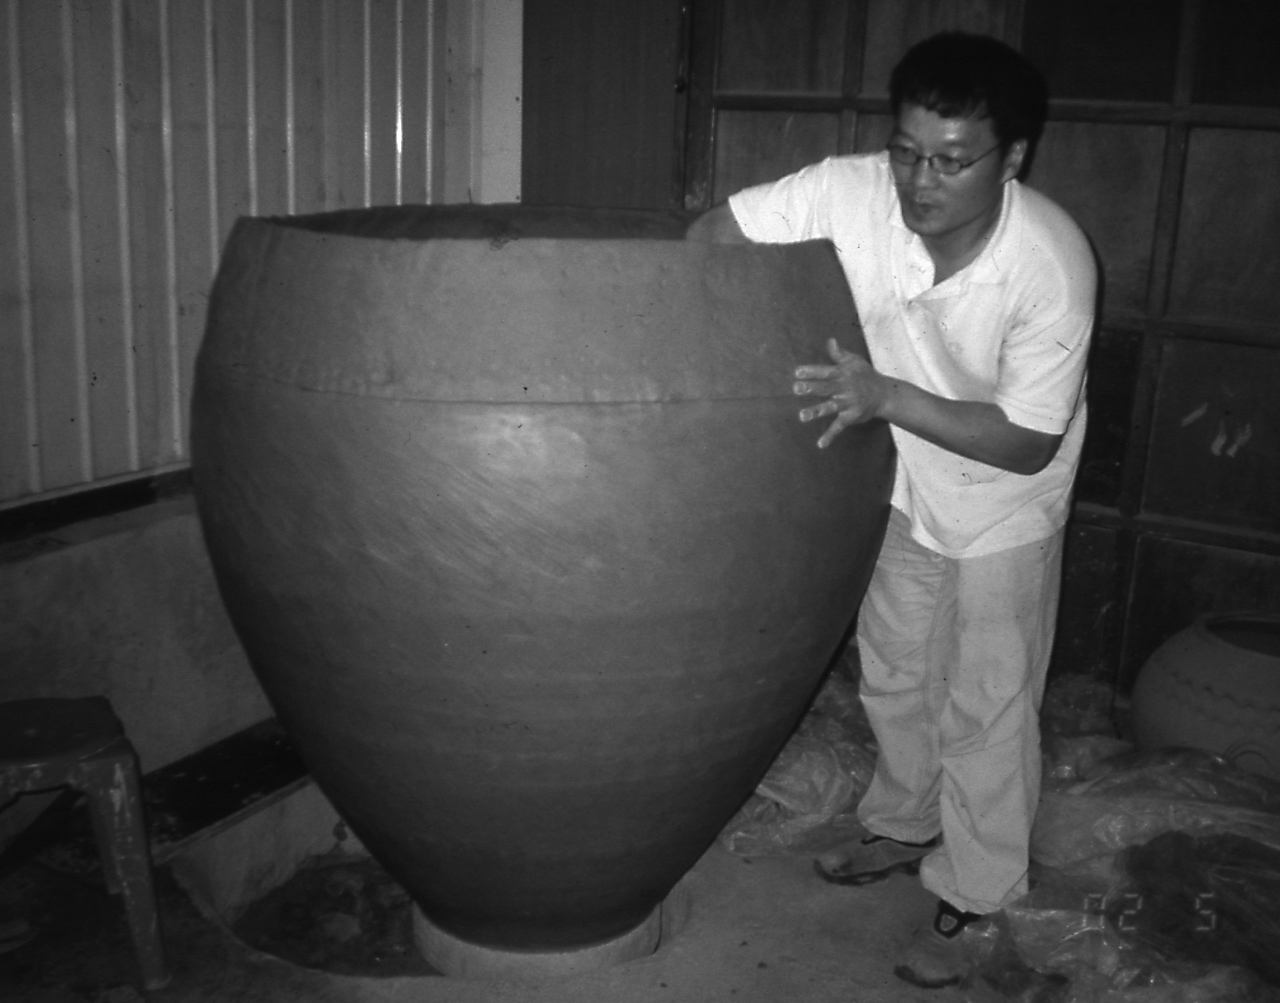 Korean Clay Pottery with Lid, Onggi Hangari 옹기 항아리 – eKitchenary